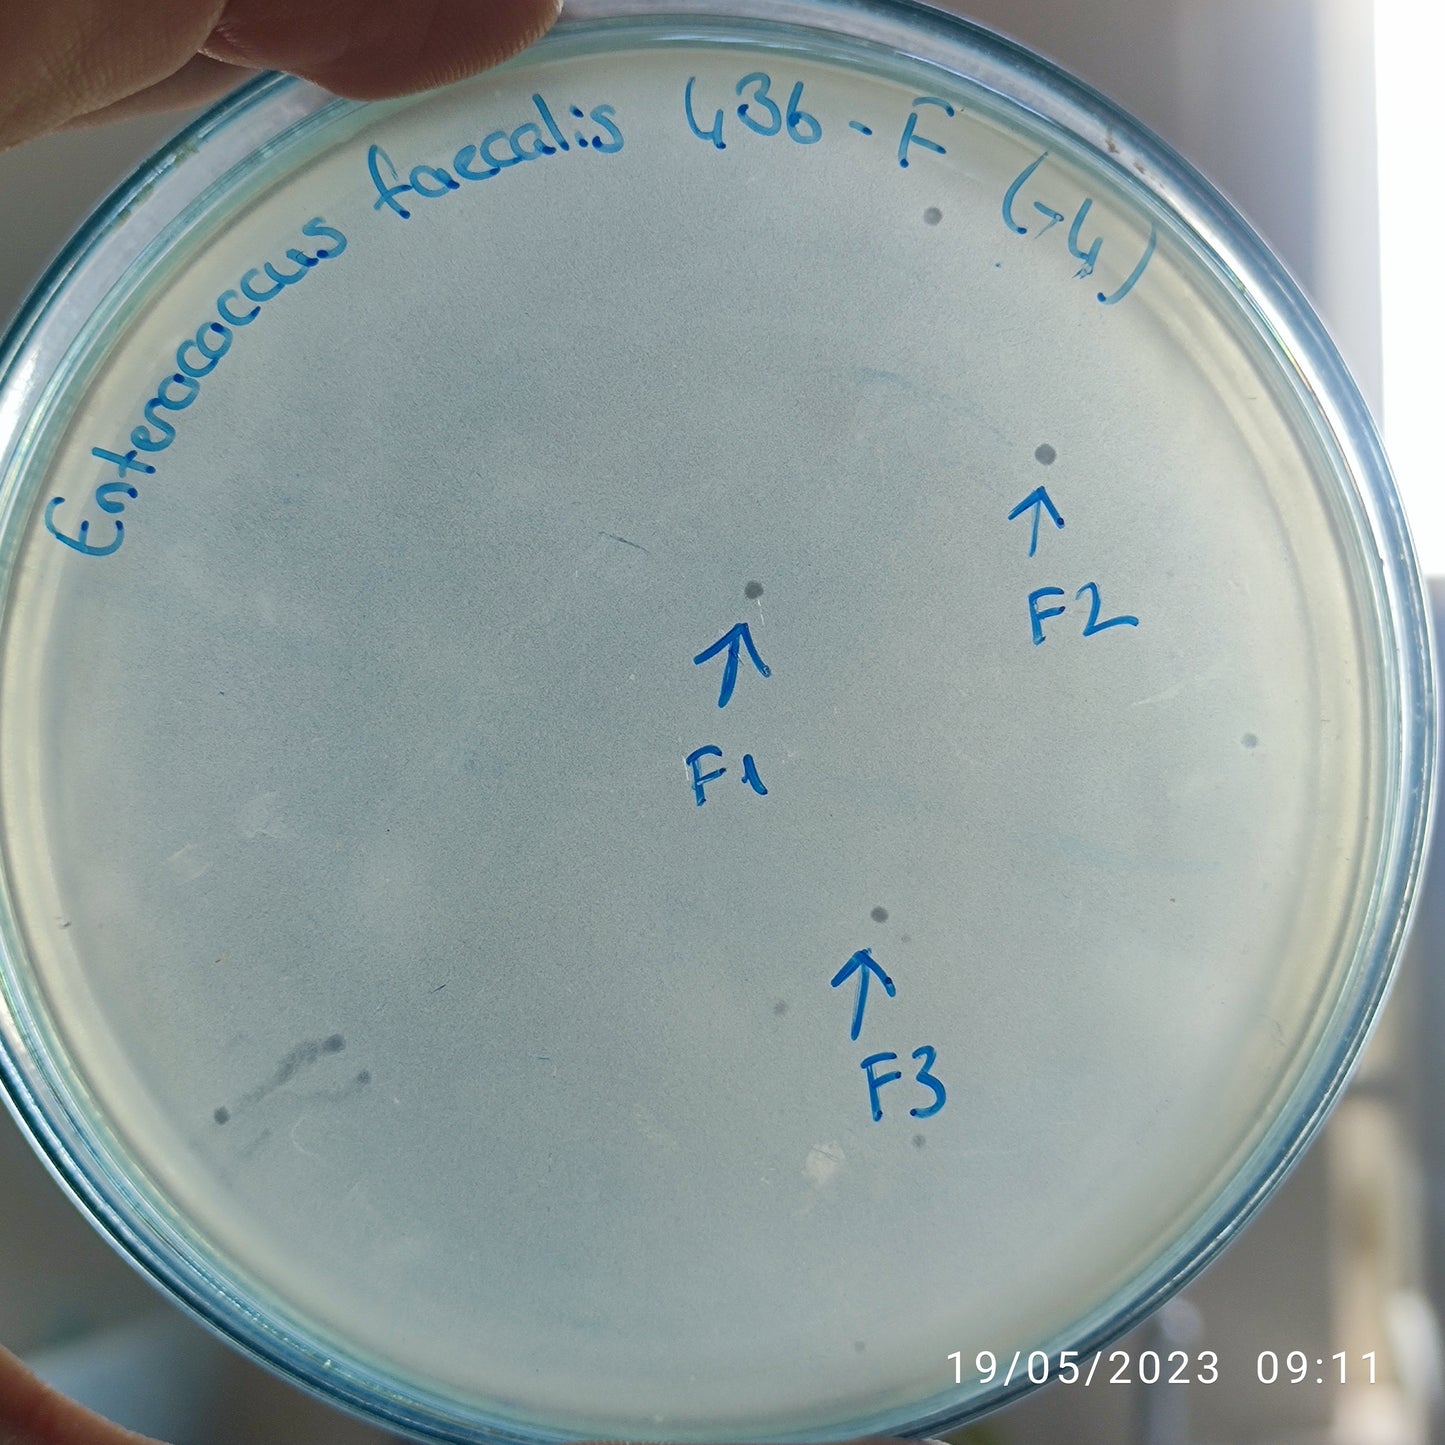 Enterococcus faecalis bacteriophage 110436F